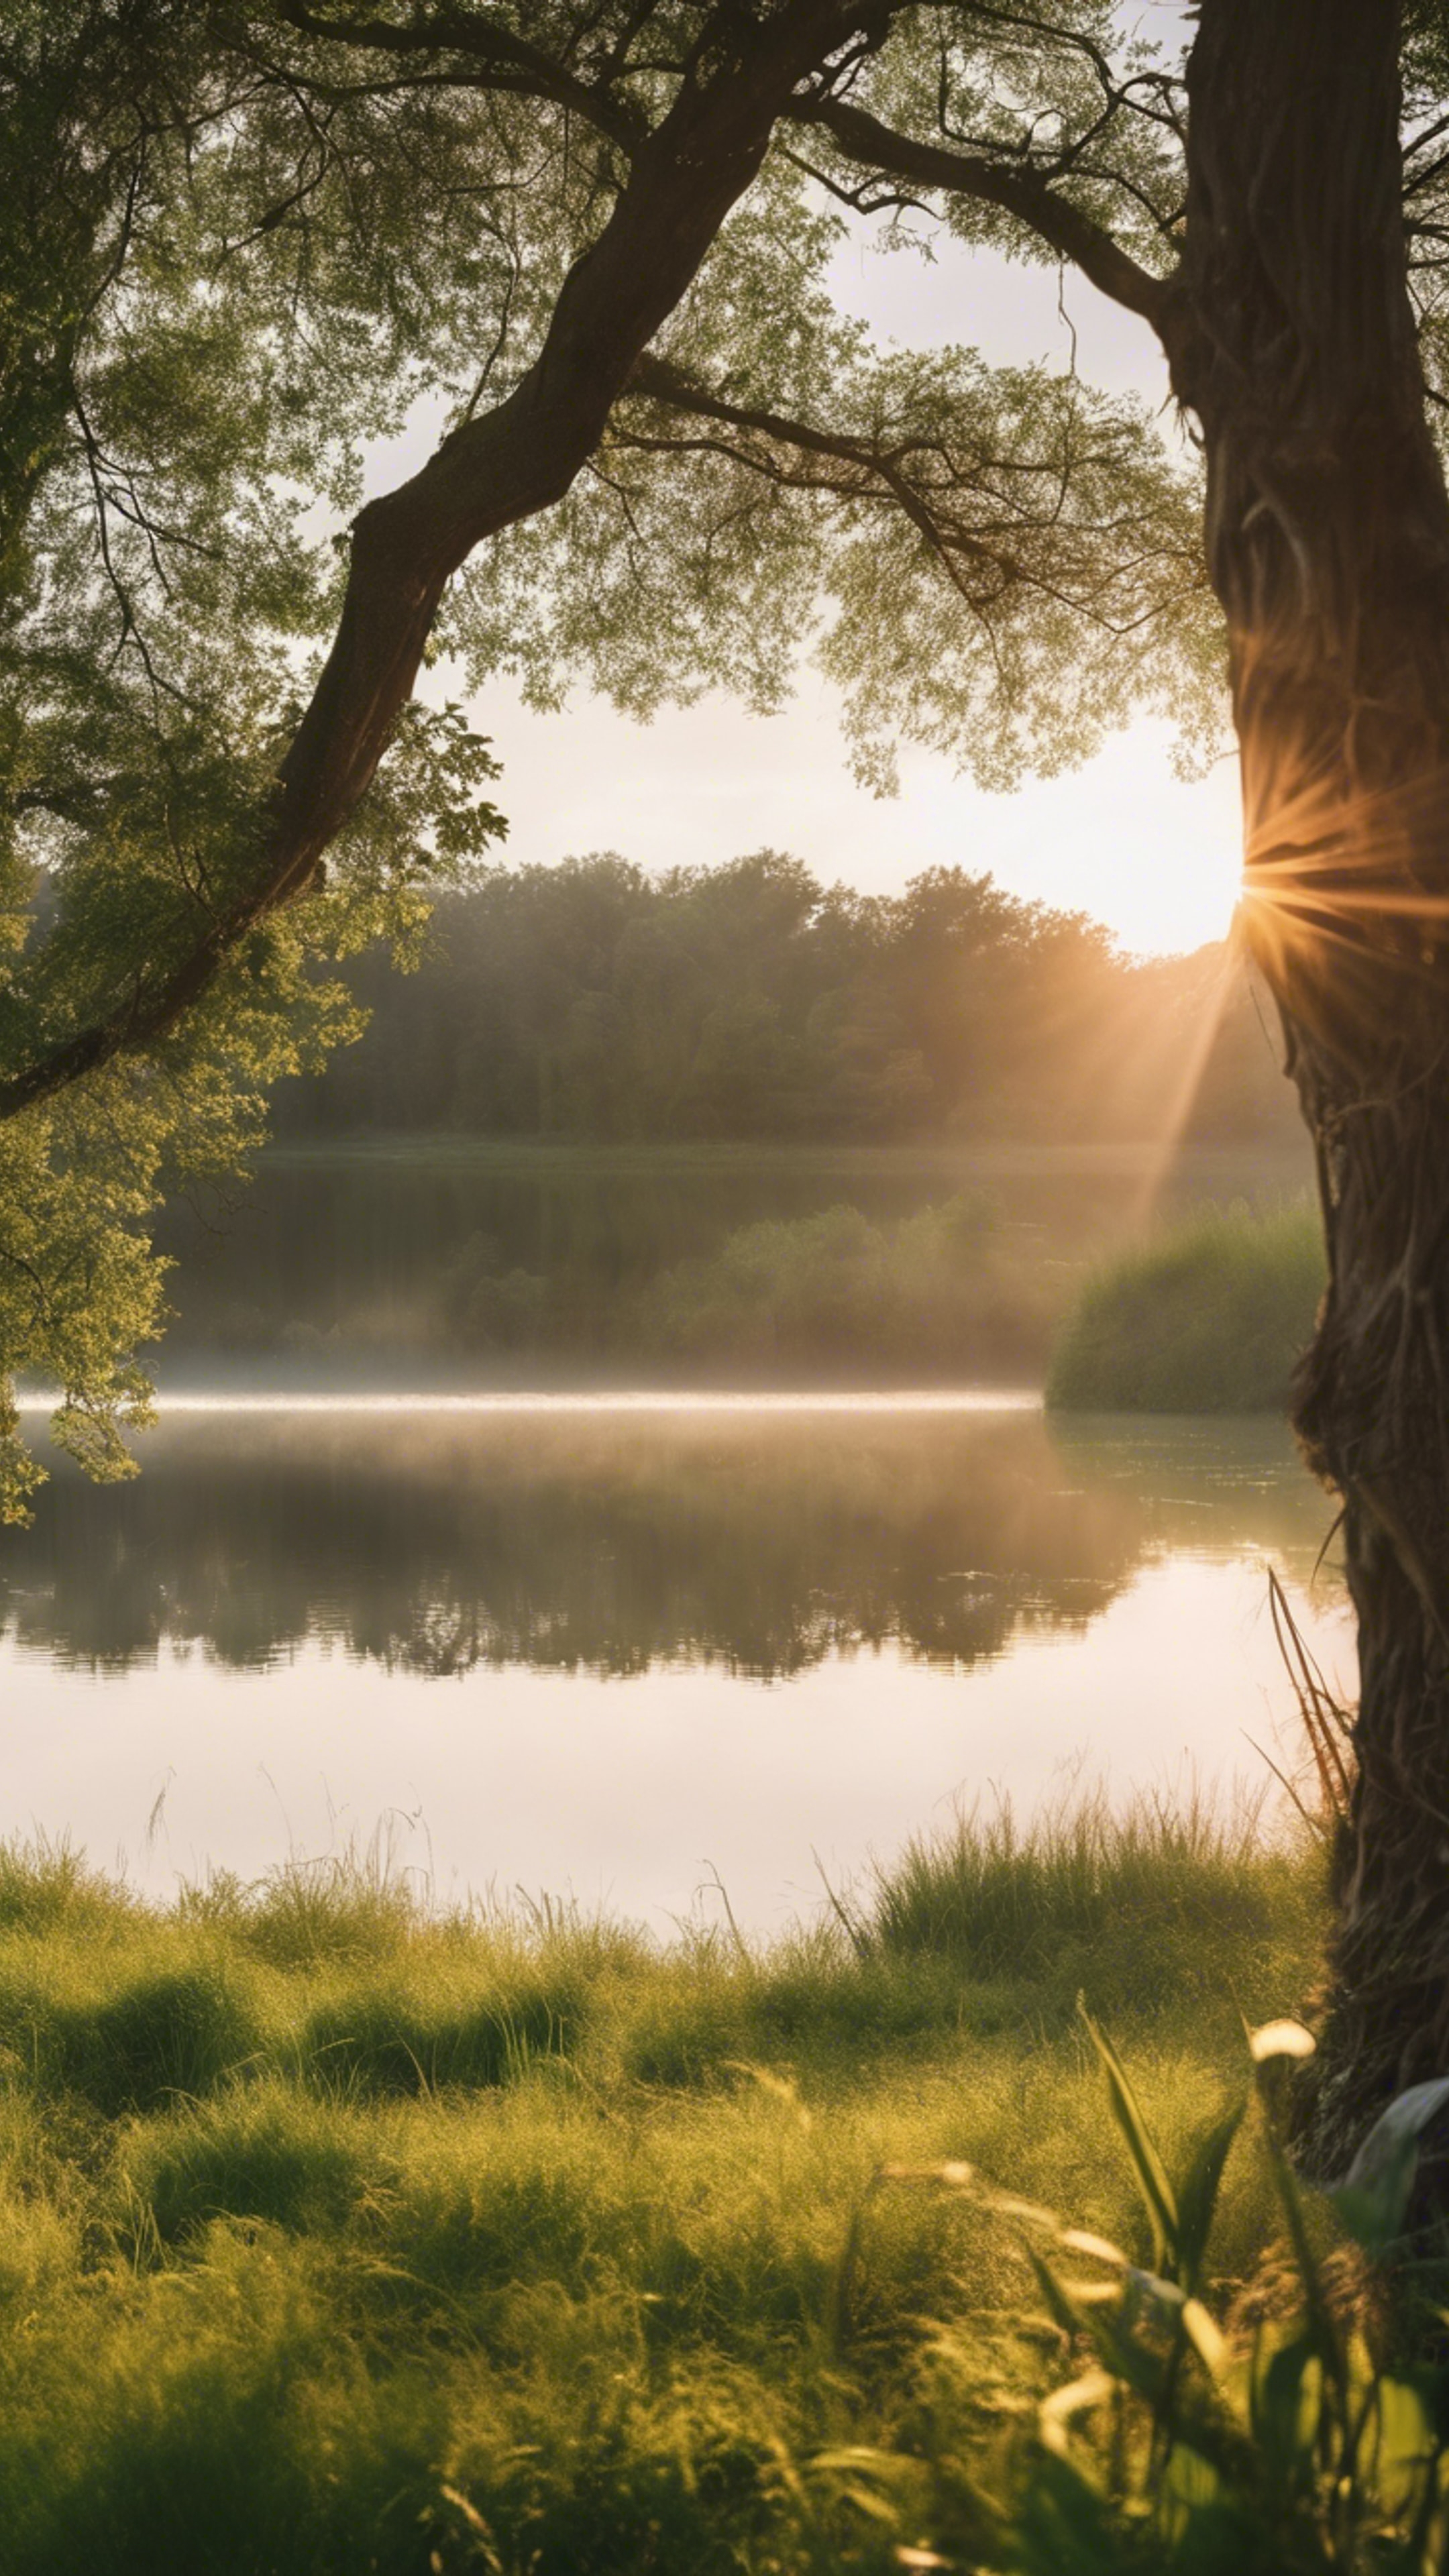 A beautiful sunrise reflecting off a serene lake, enveloped by lush green meadows. Tapéta[3fcd1b5f237347a583b1]